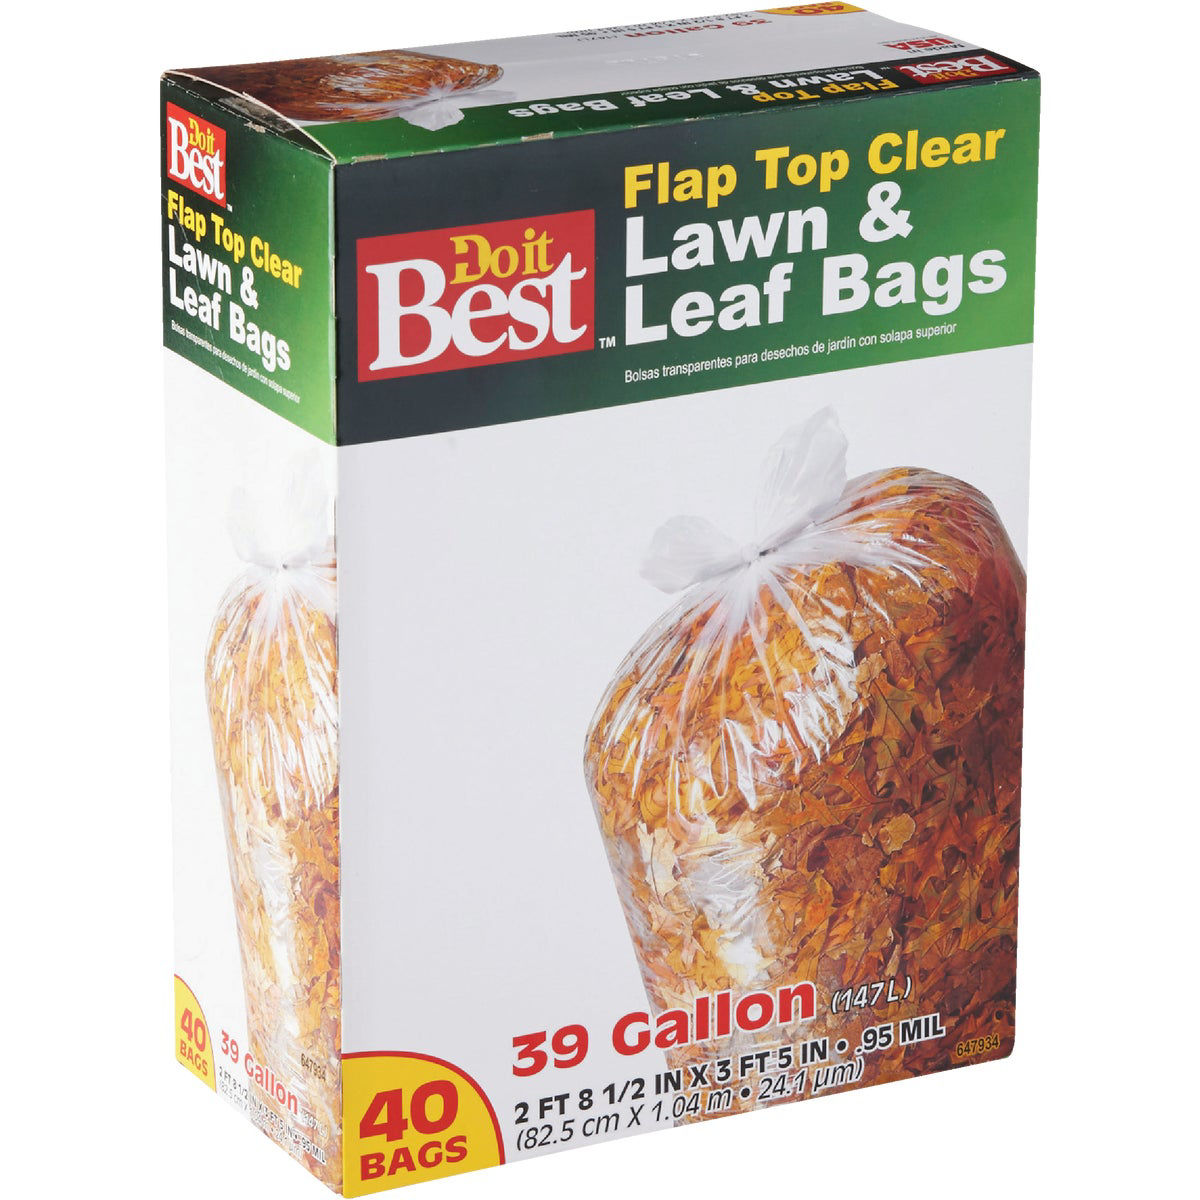 Basic Lawn & Leaf Trash Bags, Flap Tie, 39 Gallon, 10 Bags